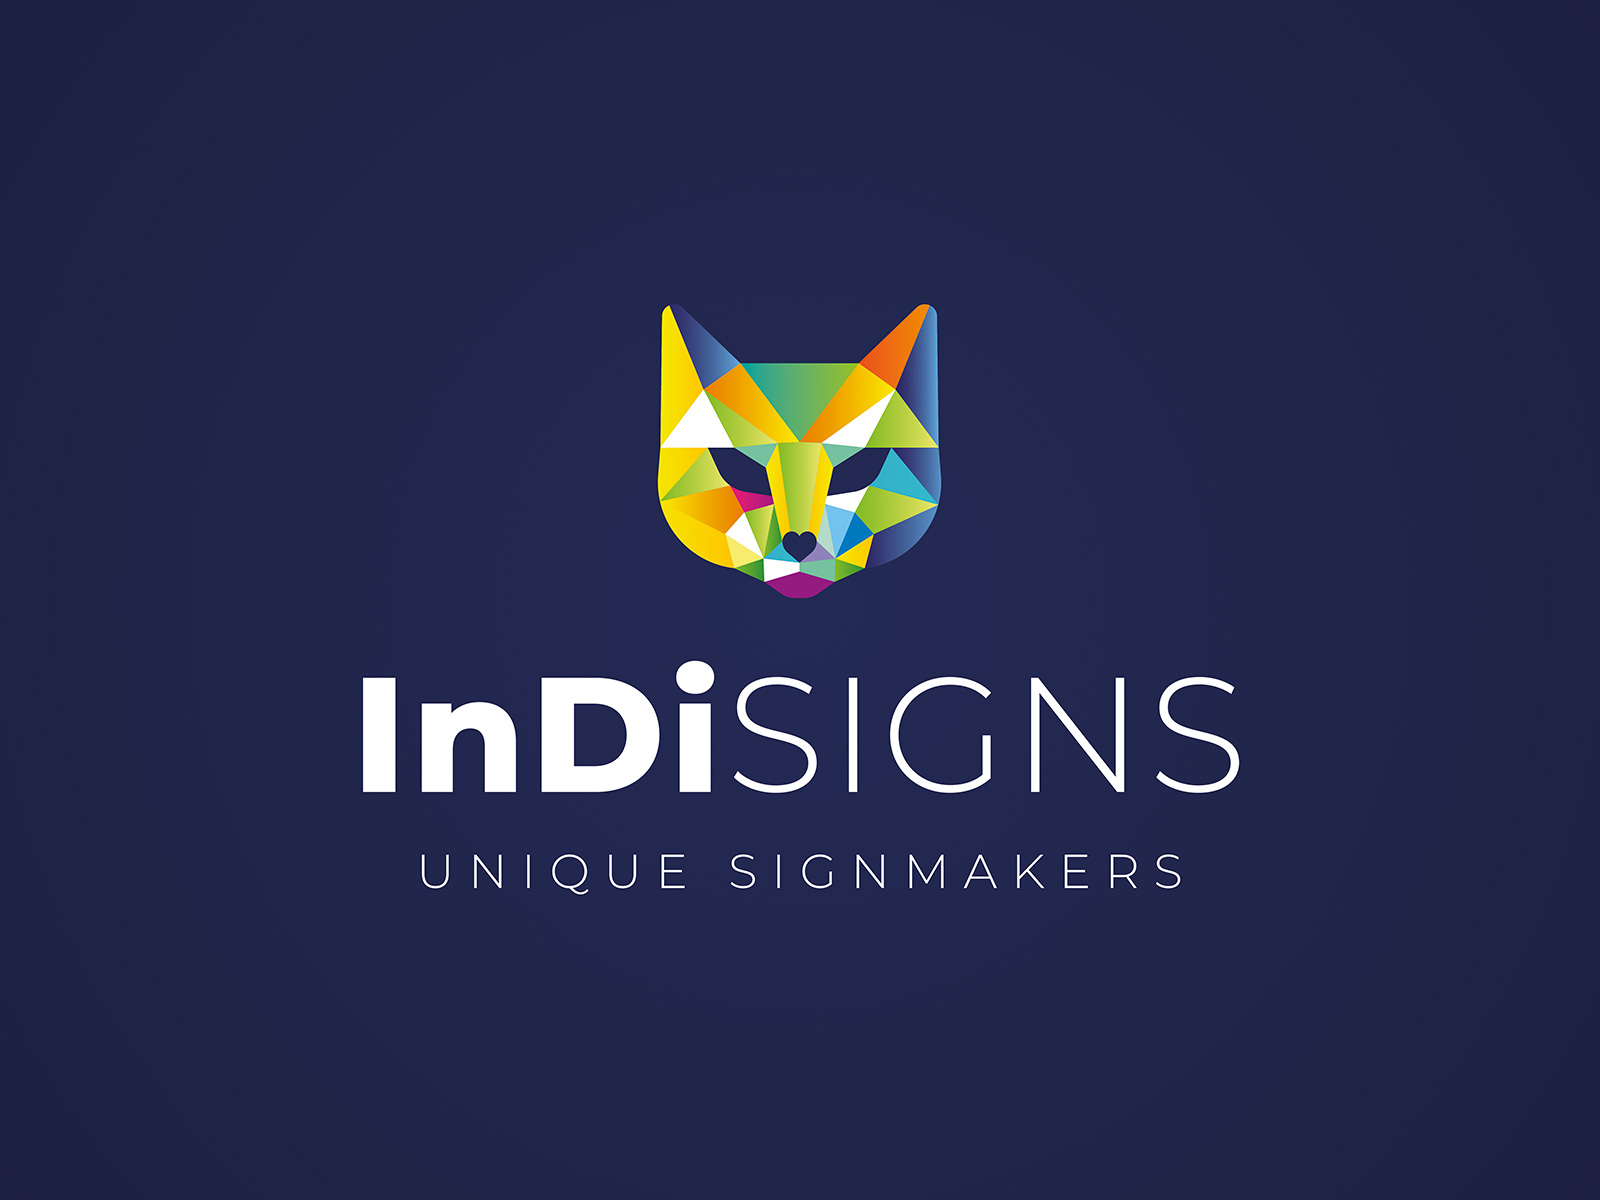 InDiSIGNS signage logo